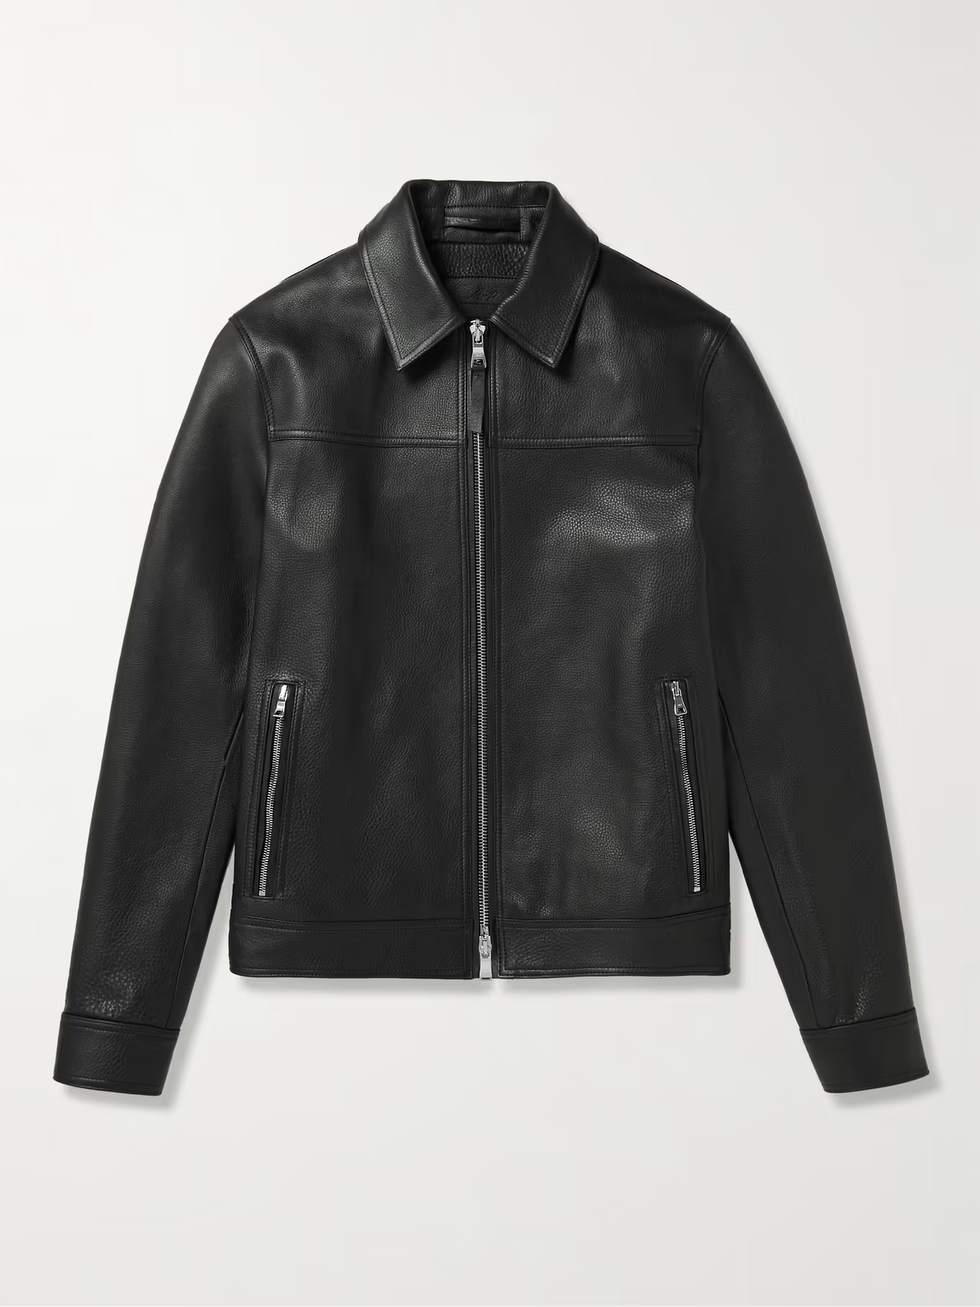 Full-Grain Leather Coach Jacket